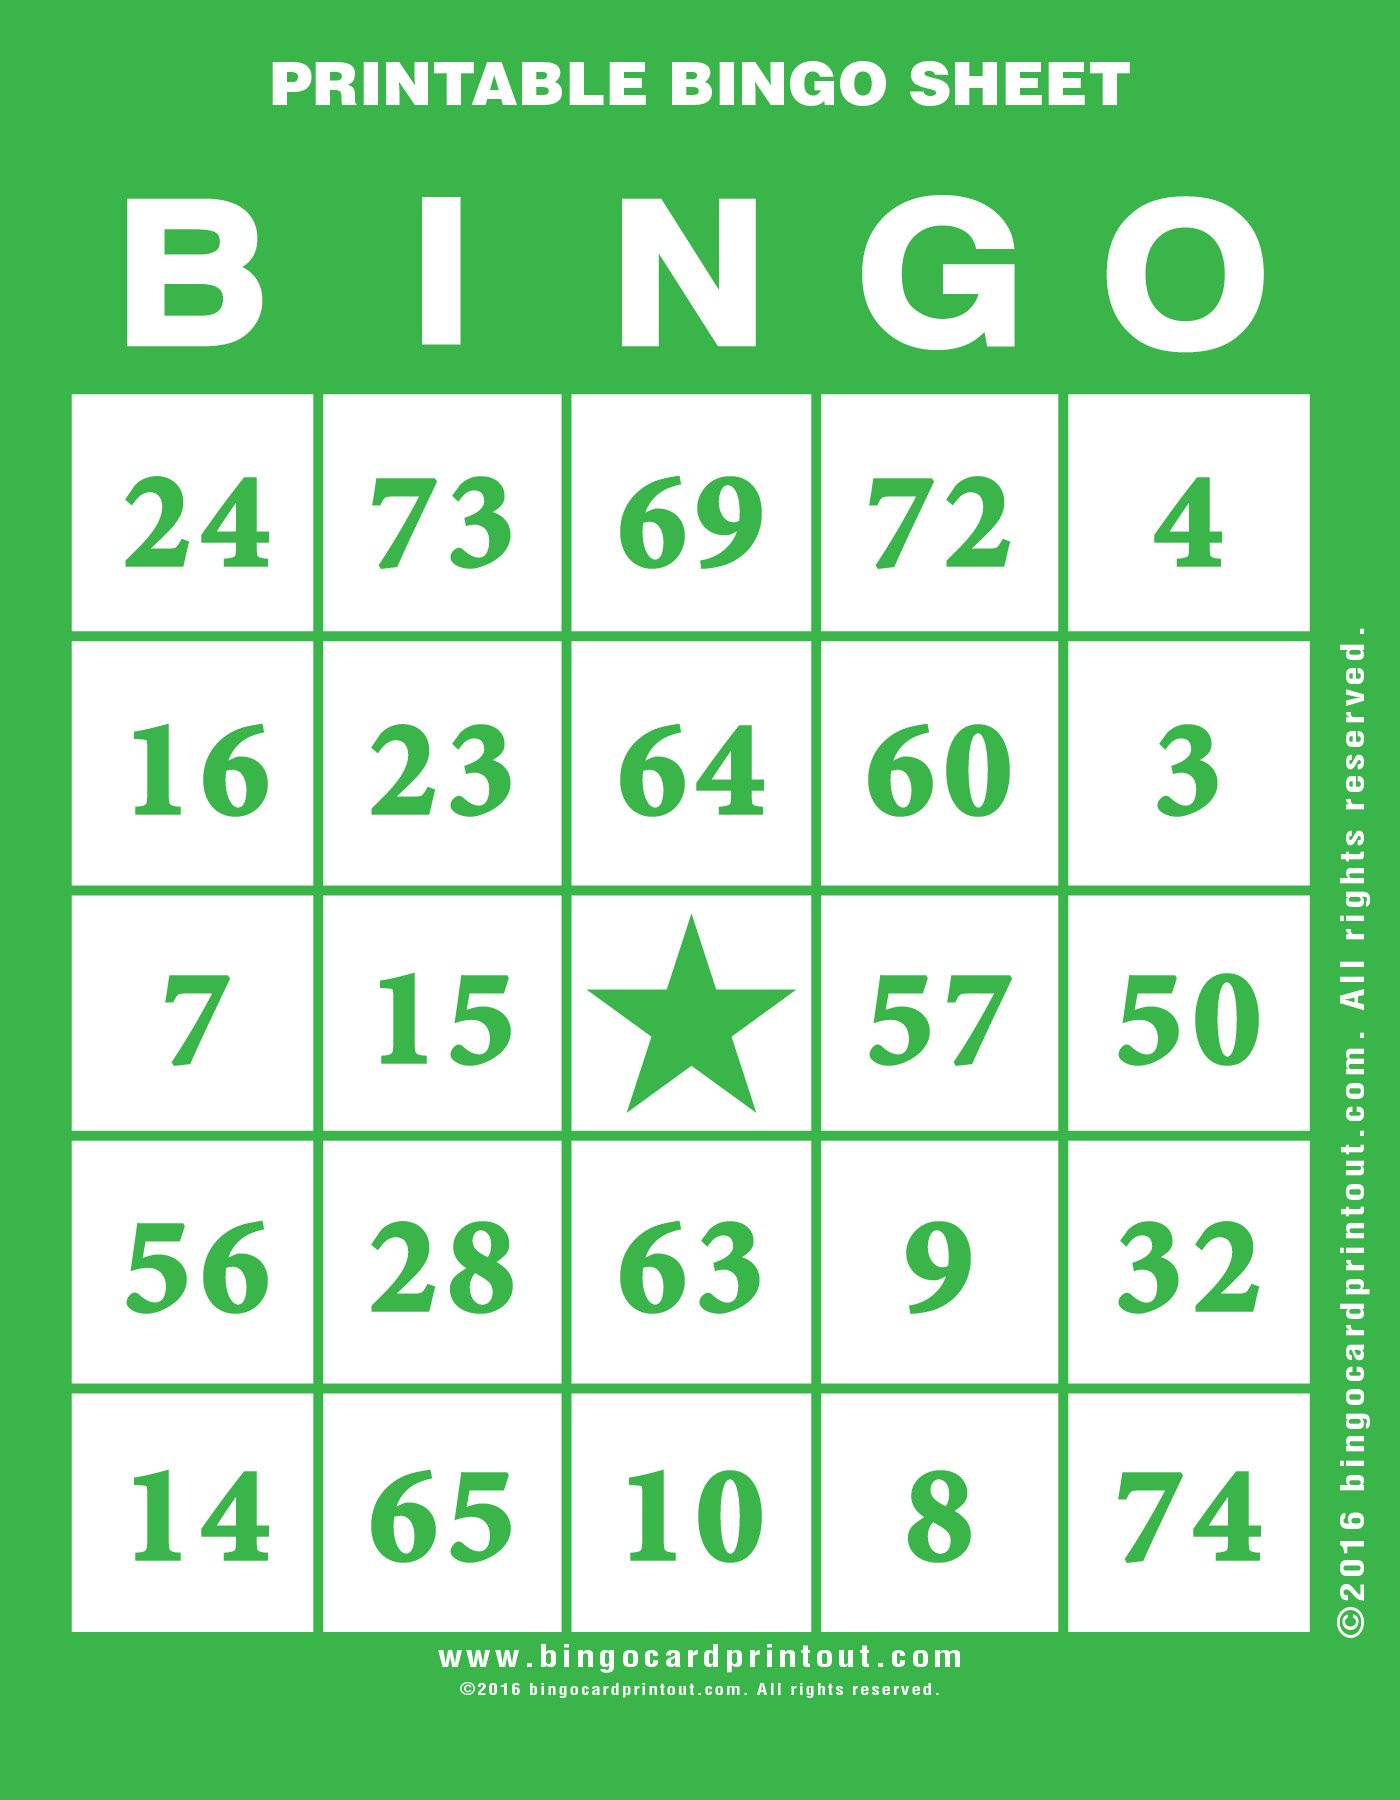 Bingo Printable Call Out Sheet Paseethis